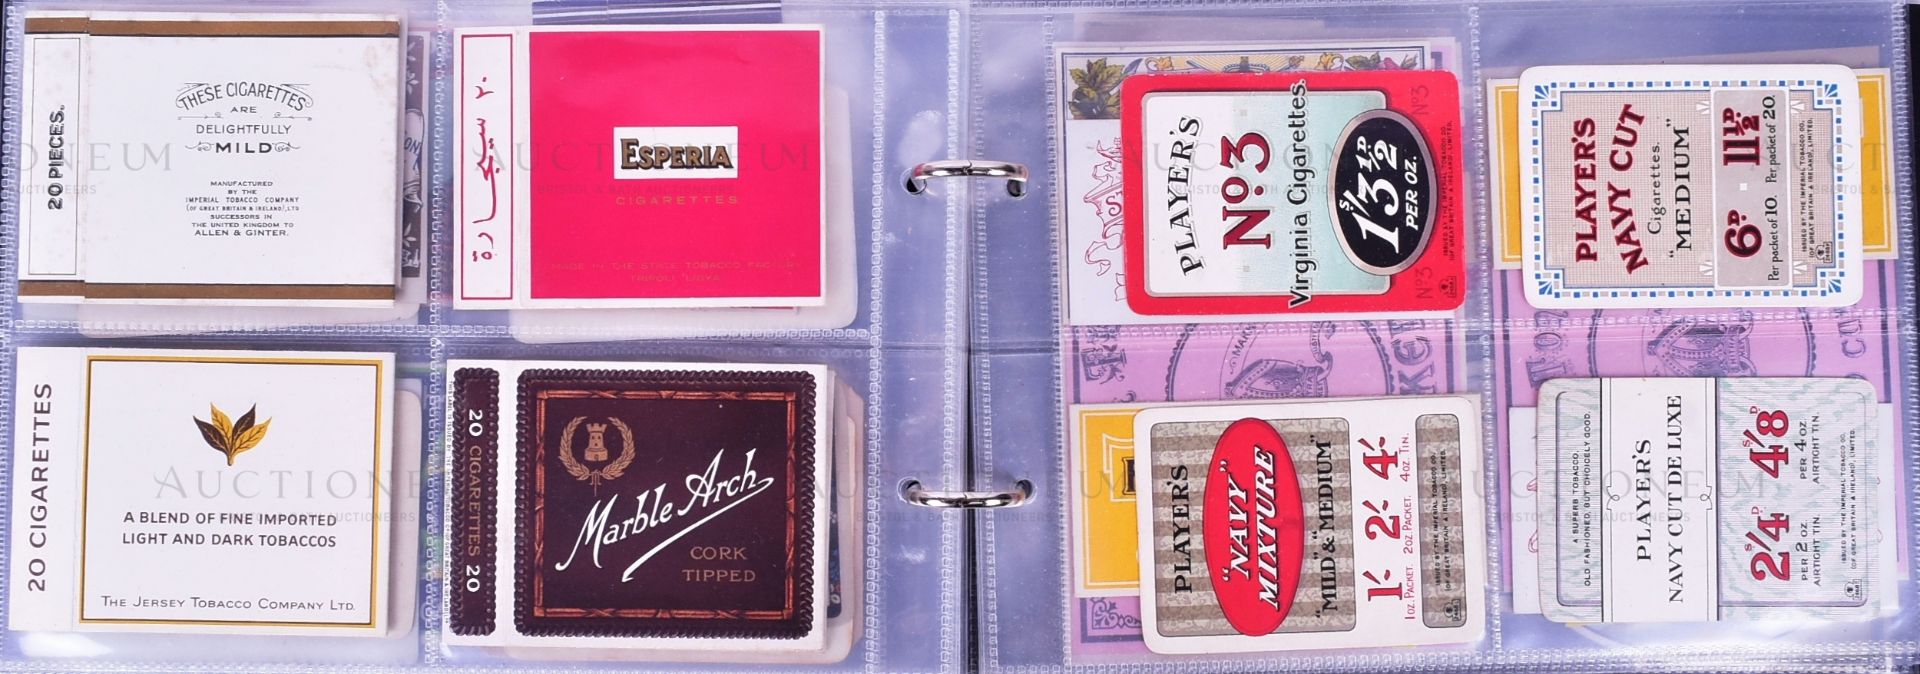 CIGARETTE PACKETS - ALBUM OF VINTAGE CIGARETTE PACKS - Image 11 of 16